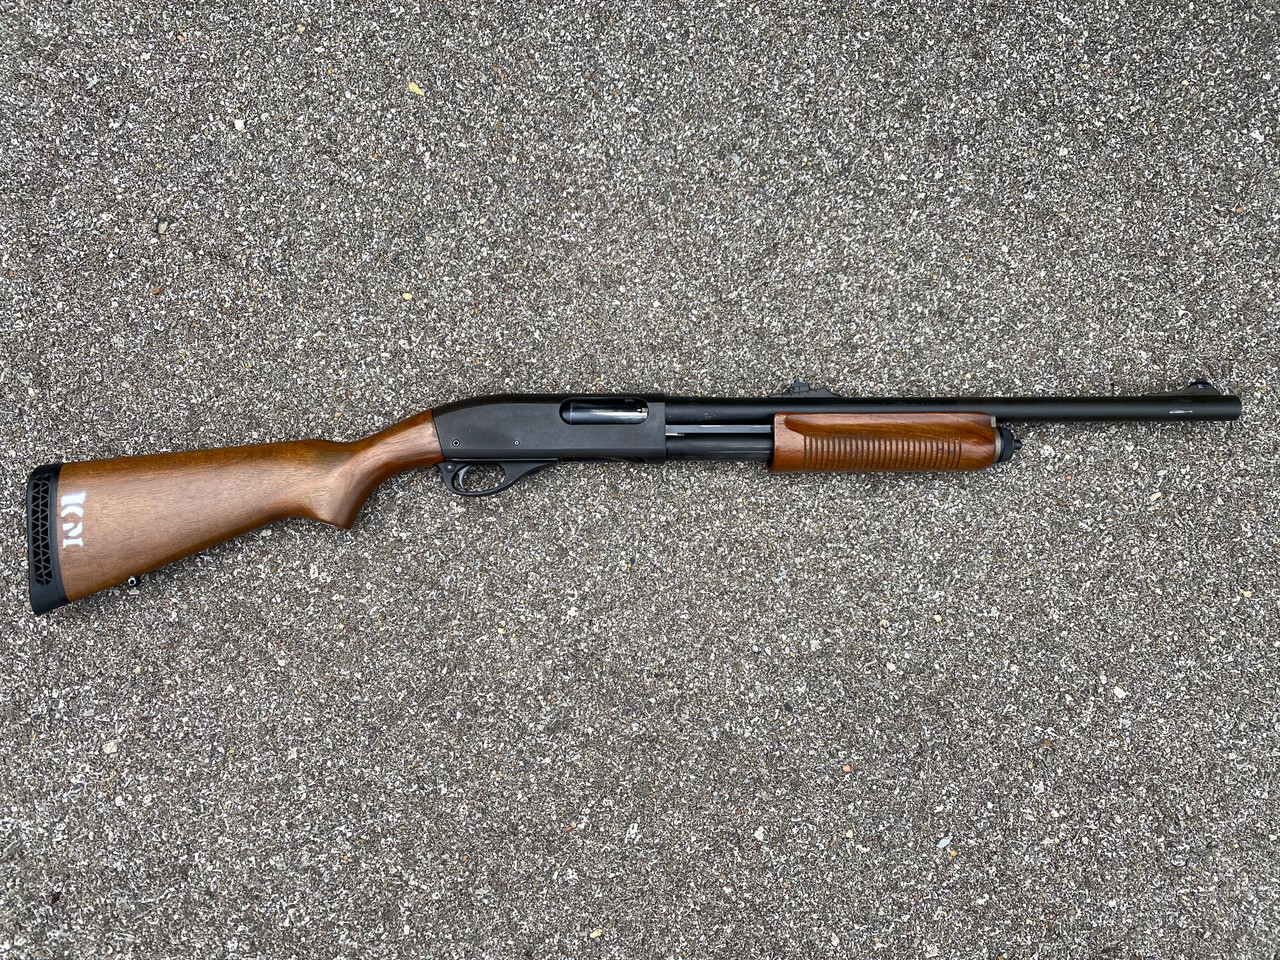 remington 870 police magnum wood stock